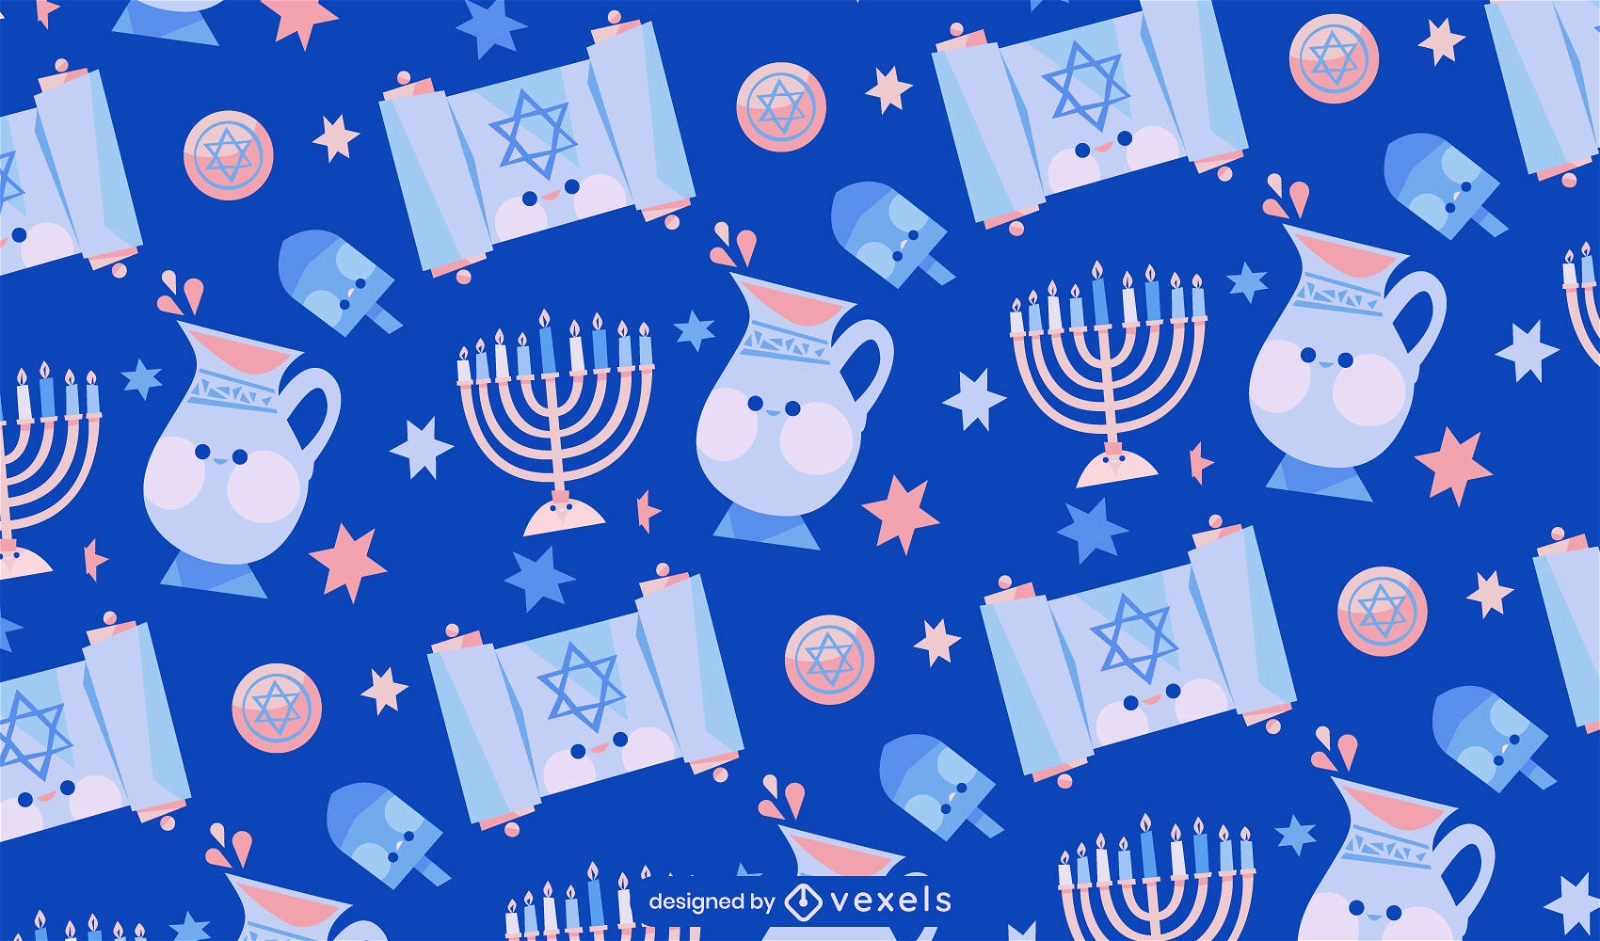 FREE Hanukkah Background Templates & Examples - Edit Online & Download |  Template.net